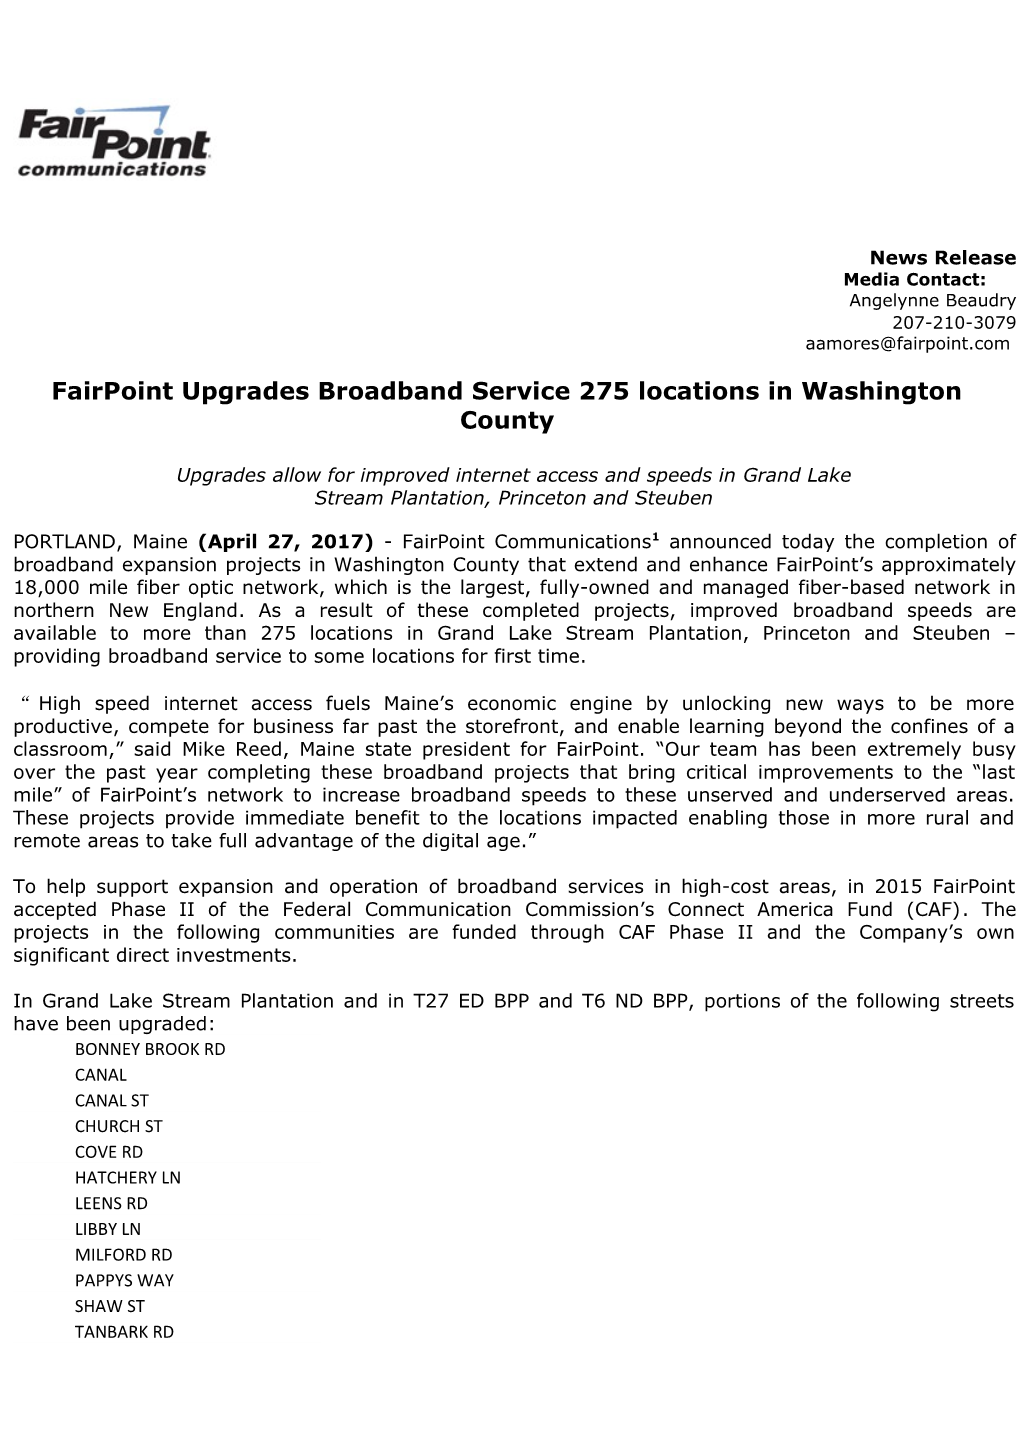 Fairpoint Upgrades Broadband Service 275 Locations in Washington County